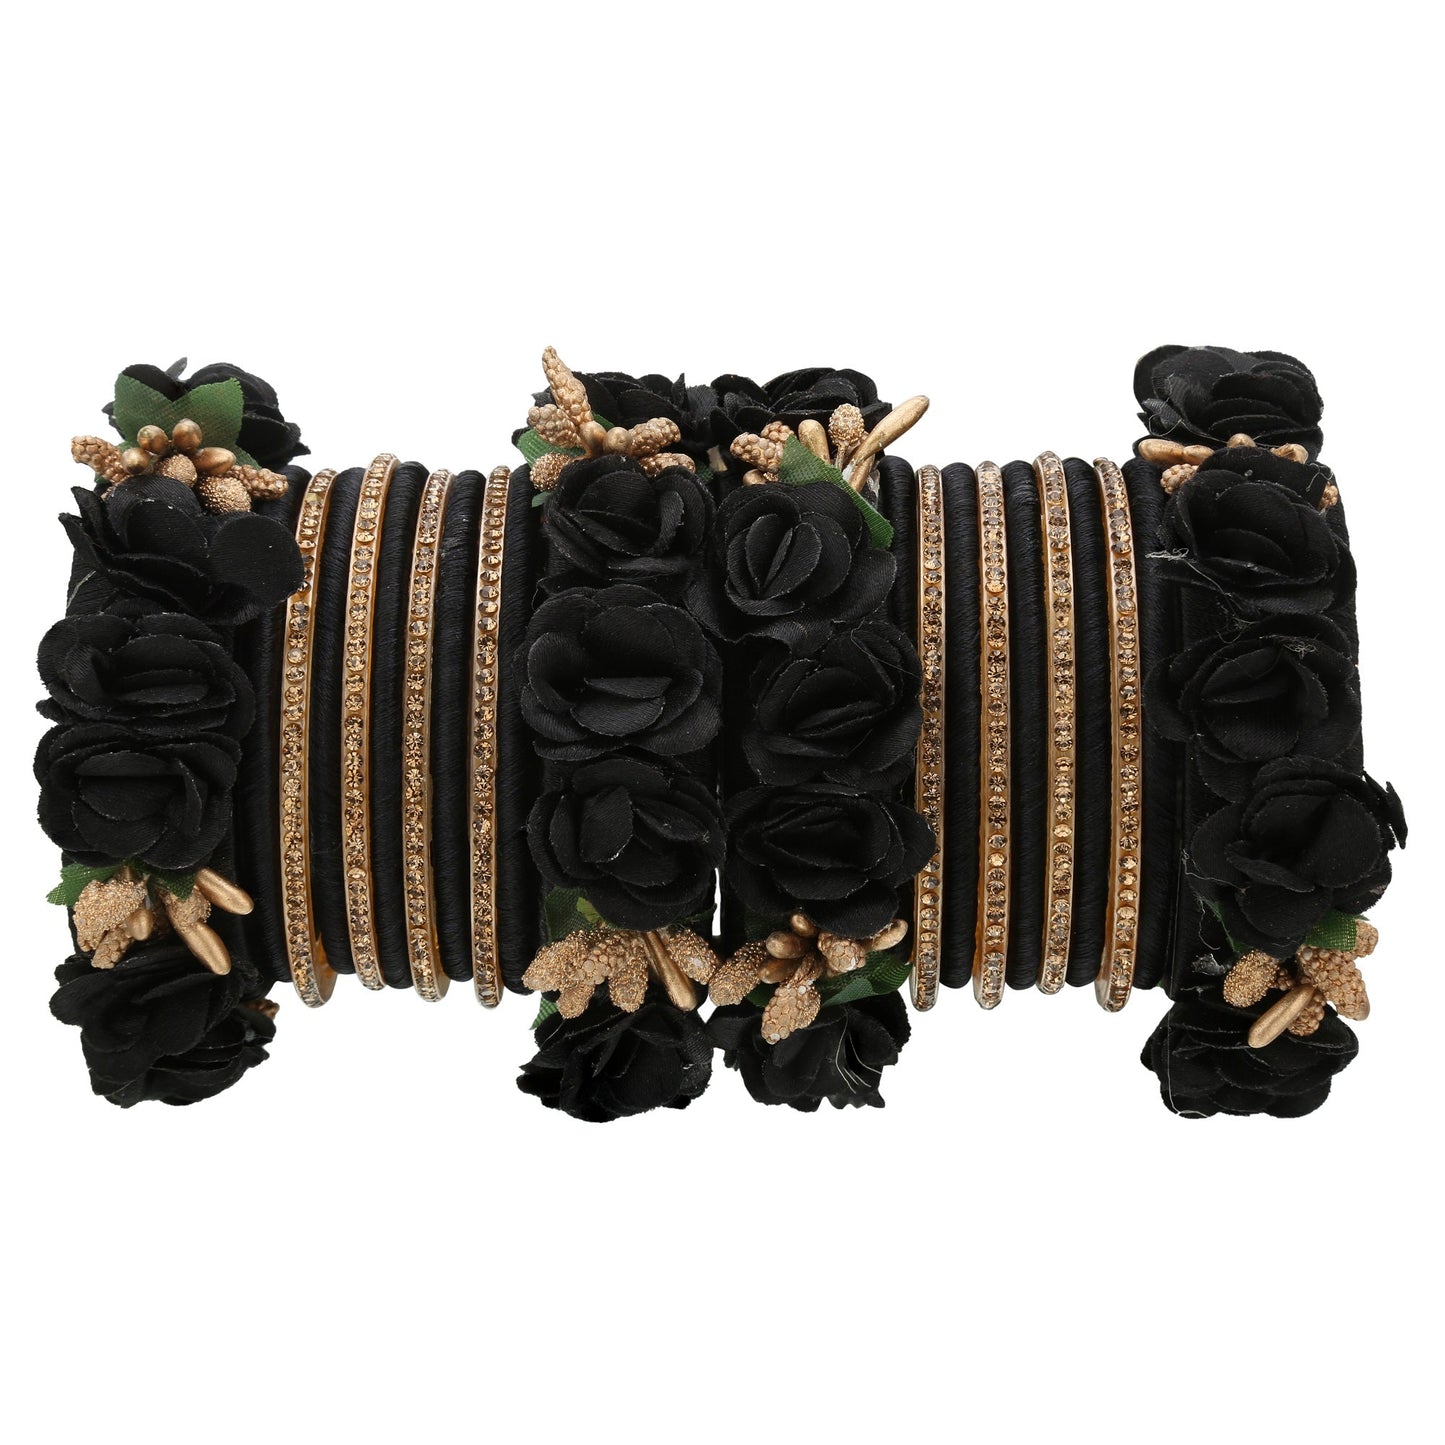 sukriti beautiful handcrafted black flower designer silk thread bridal chuda wedding bangles for women – set of 22